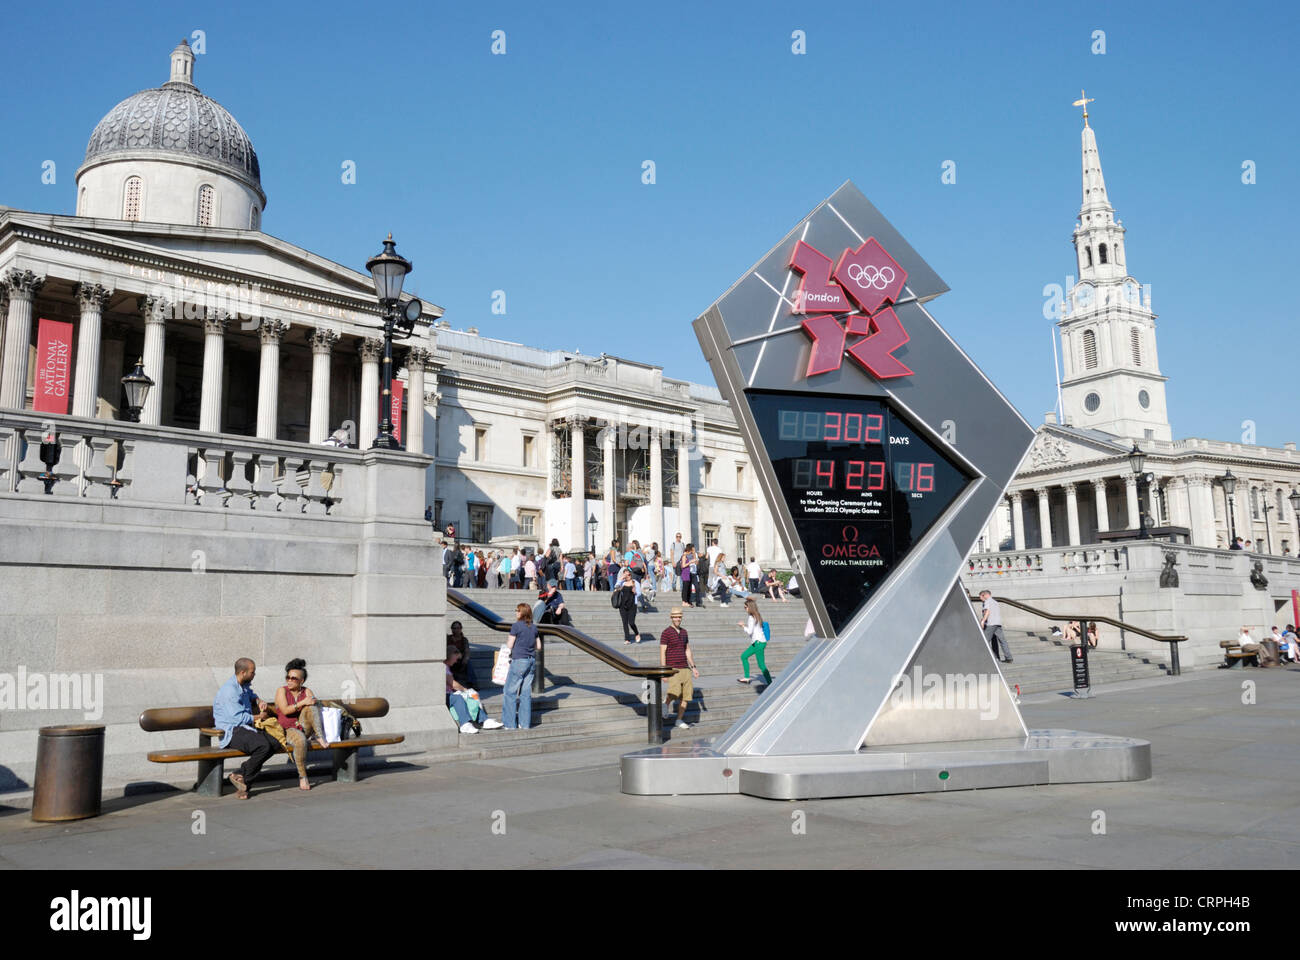 Olympic Games London 2012 countdown clock in Trafalgar Square. Stock Photo